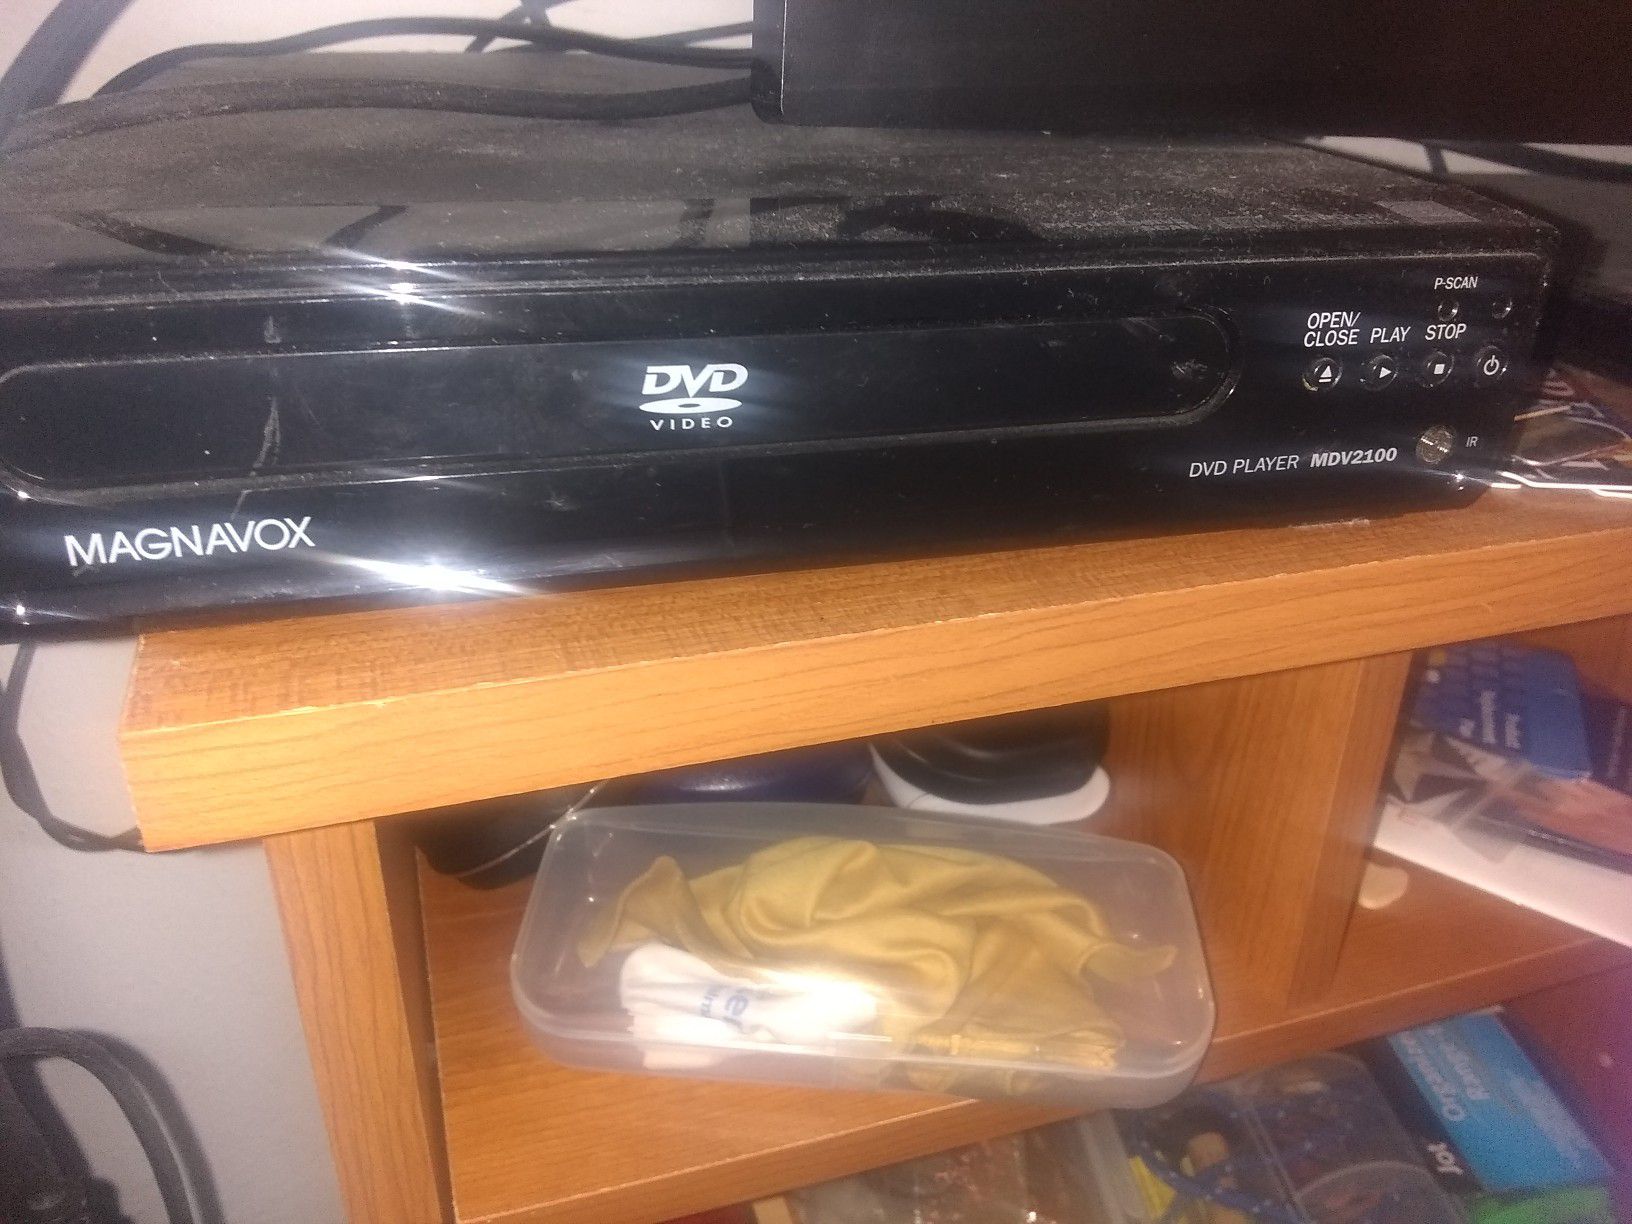 Magnavox. DVD player